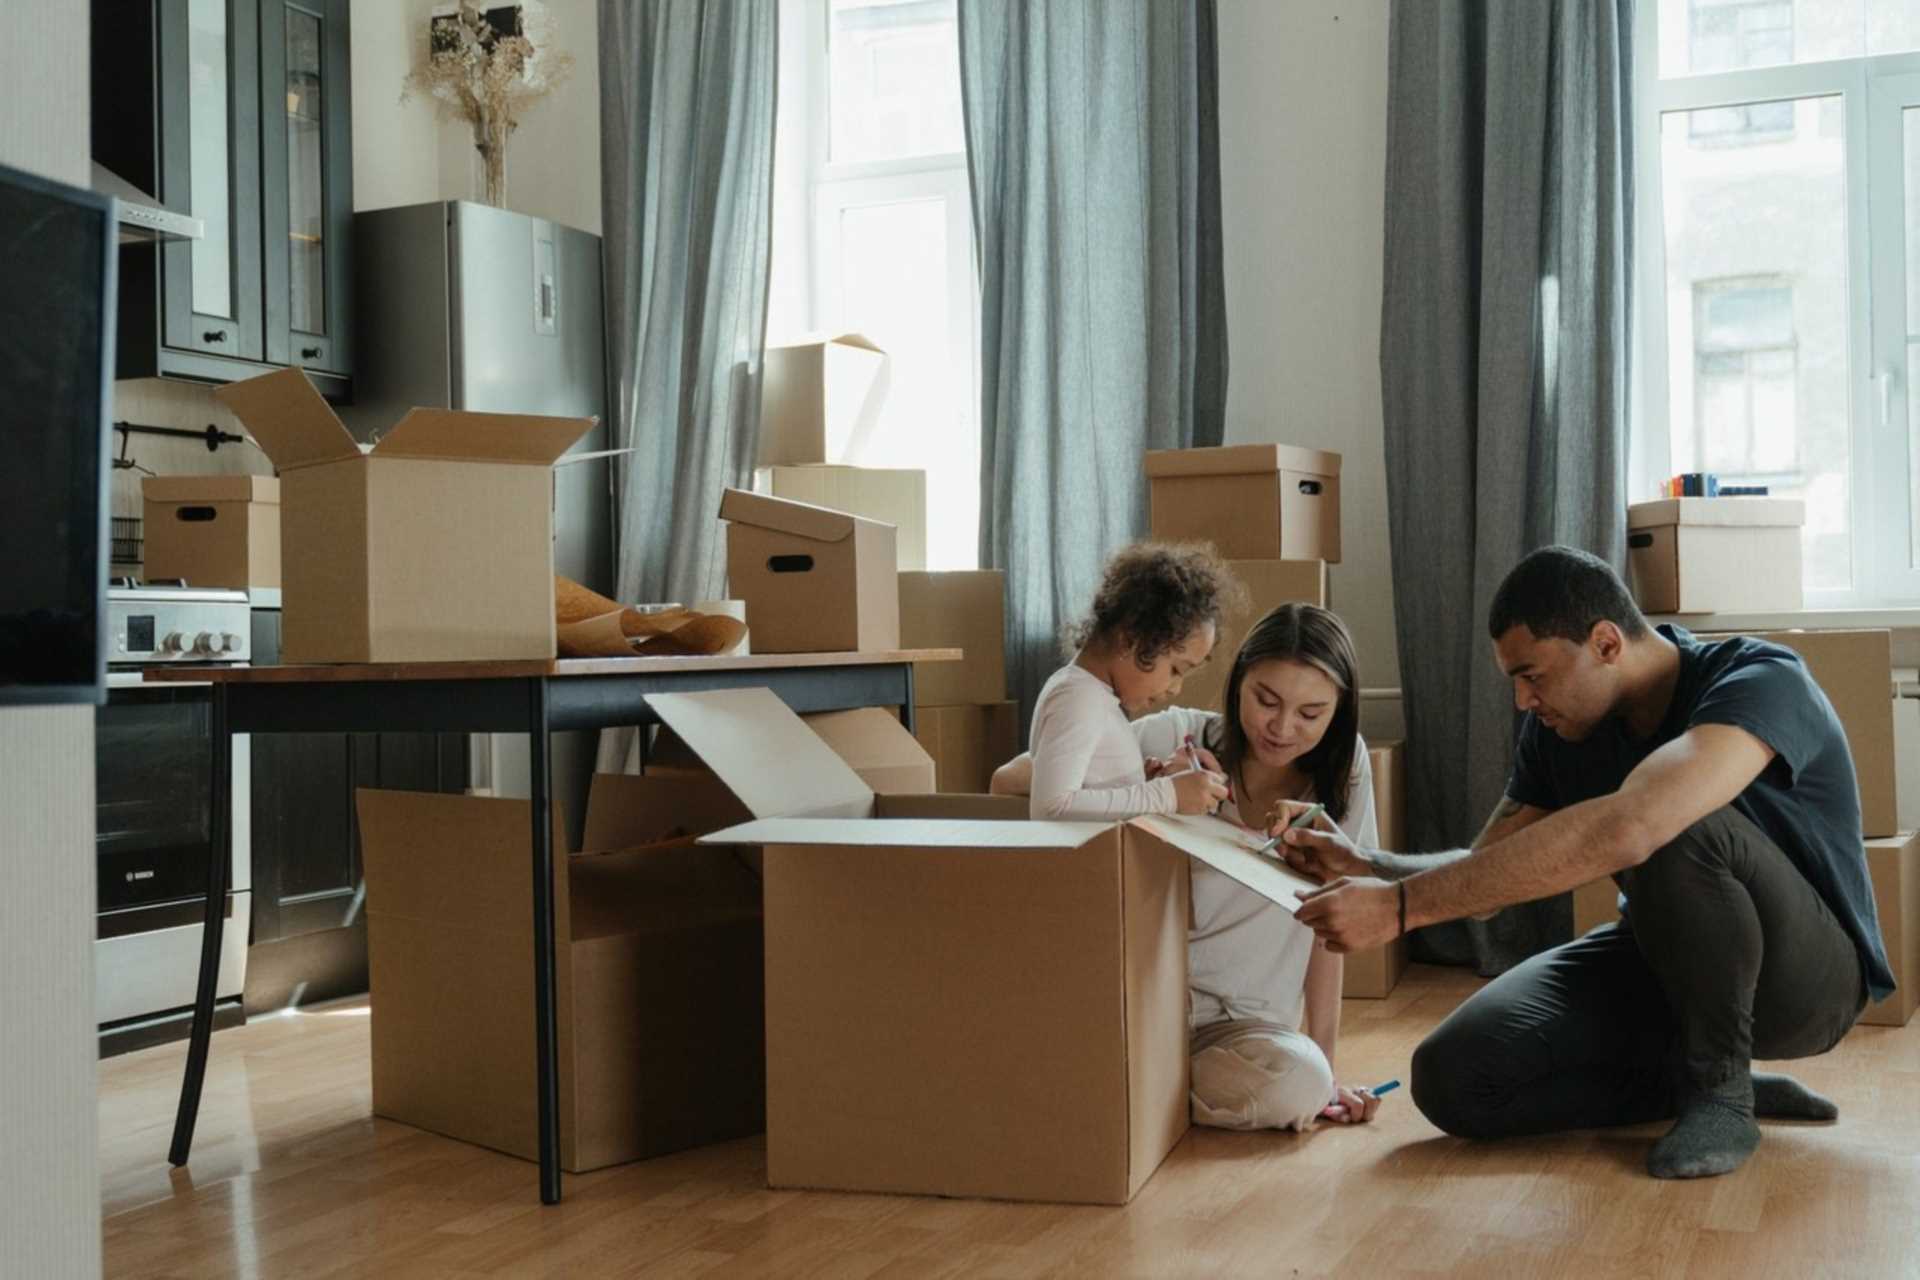 Moving home checklist